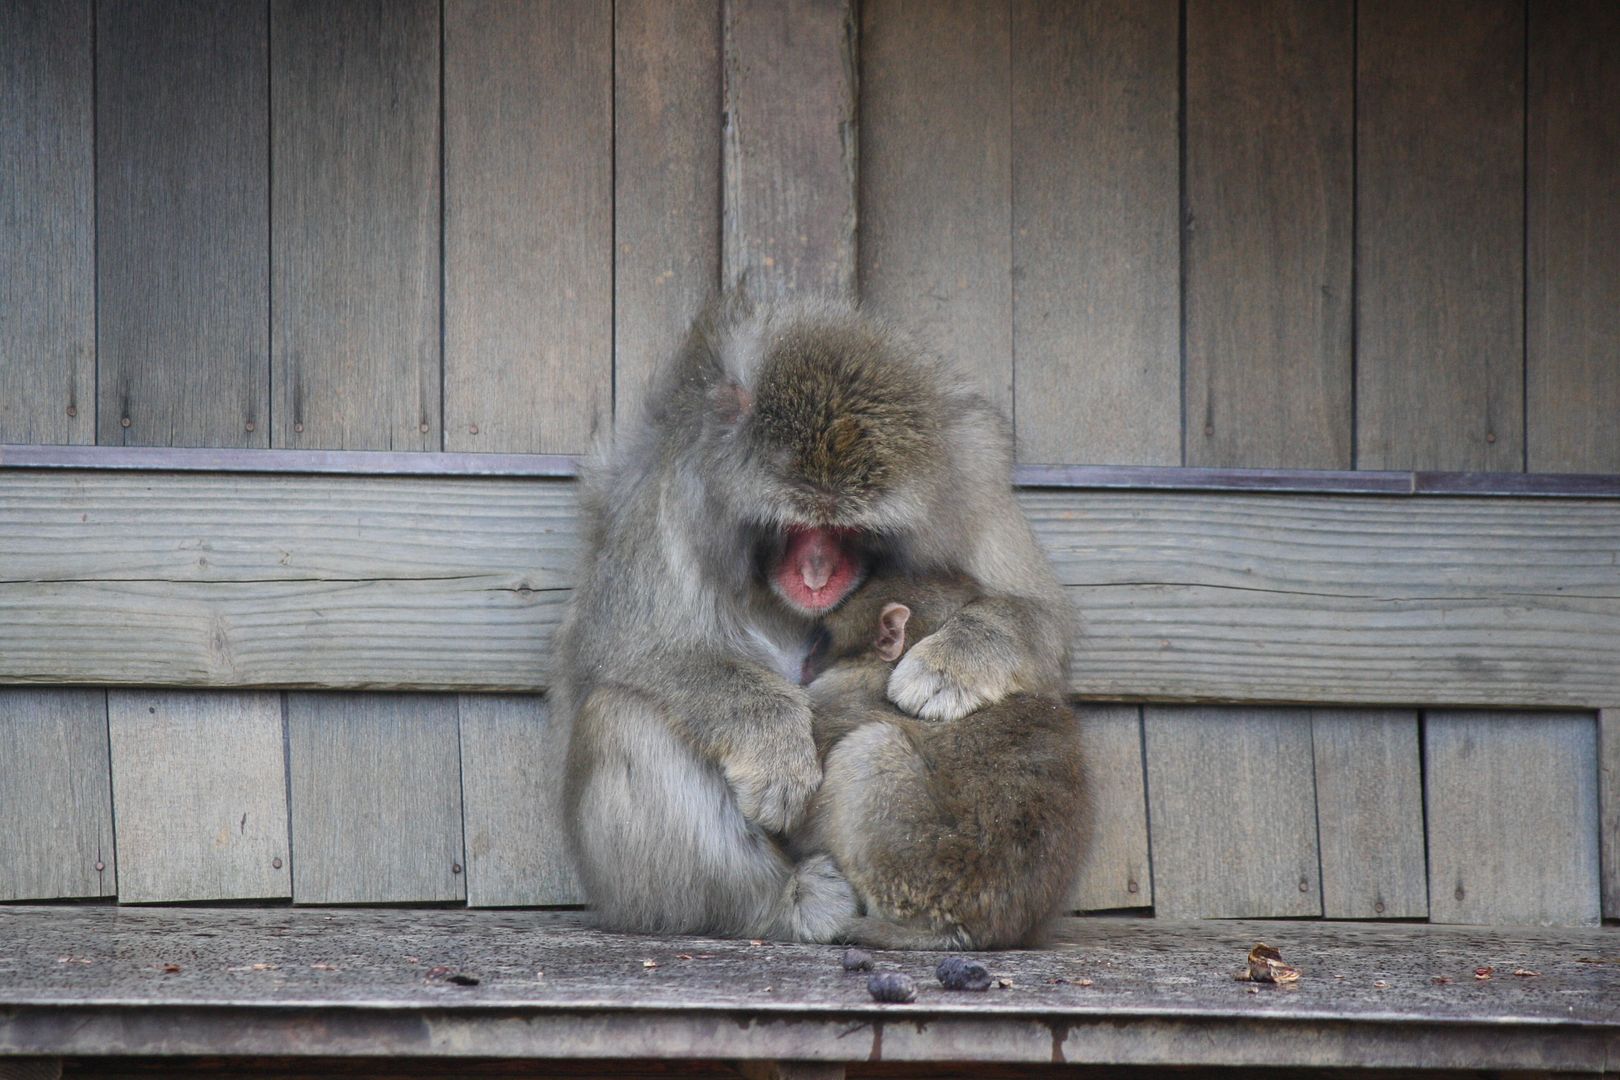 Iwatayama Monkeys in Kyoto, Japan photo 2013-12-22215040_zpsb9ba6200.jpg